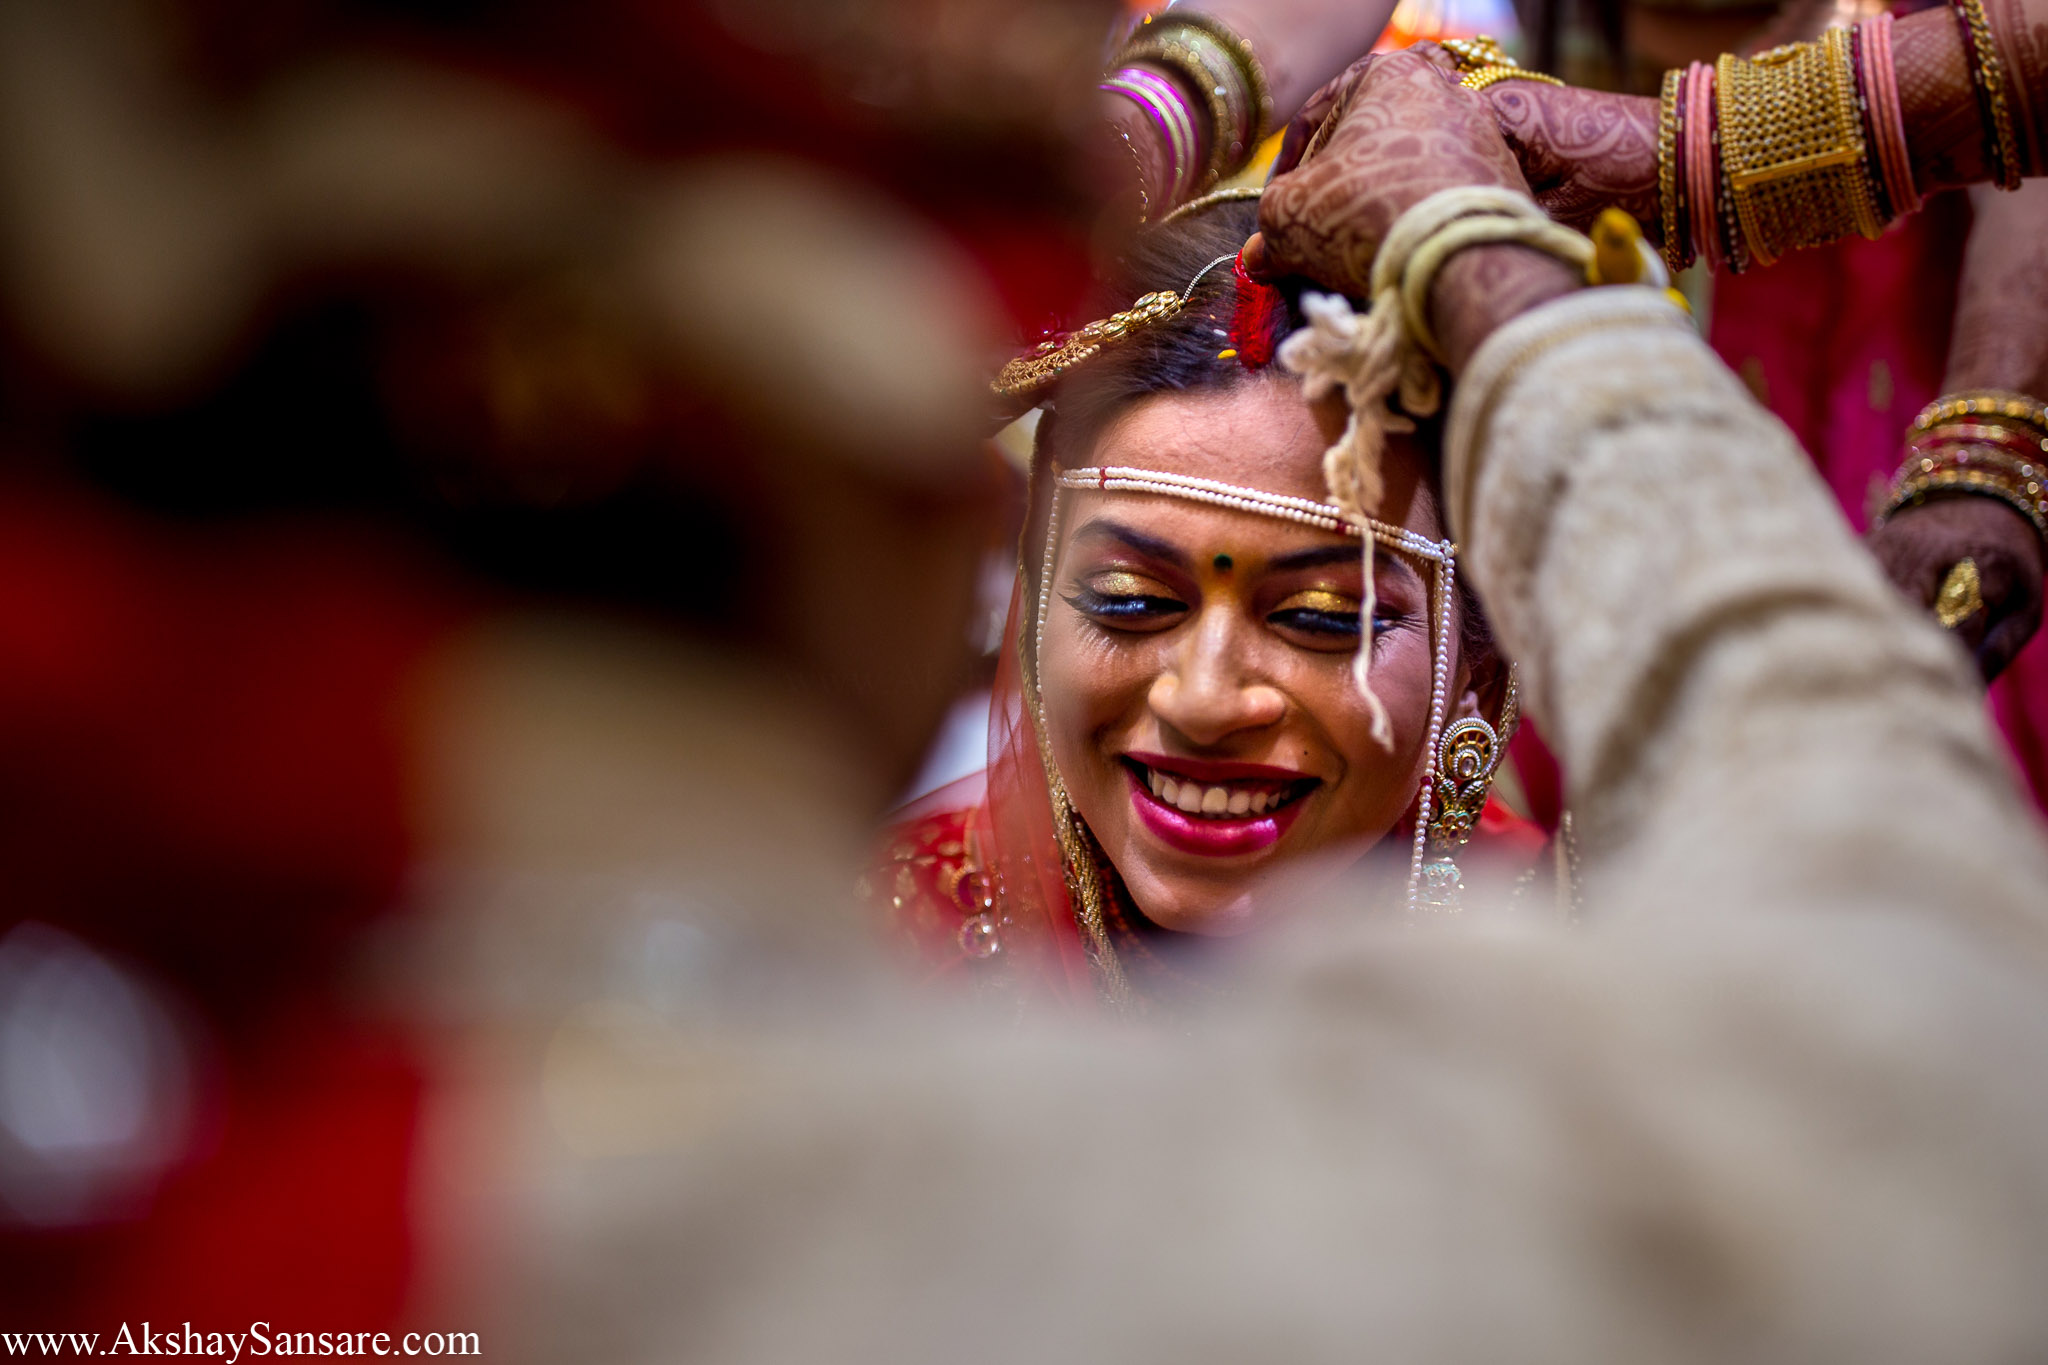 Ajay & Devika Akshay Sansare Photography Best Candid wedding photographer in mumbai india23.jpg